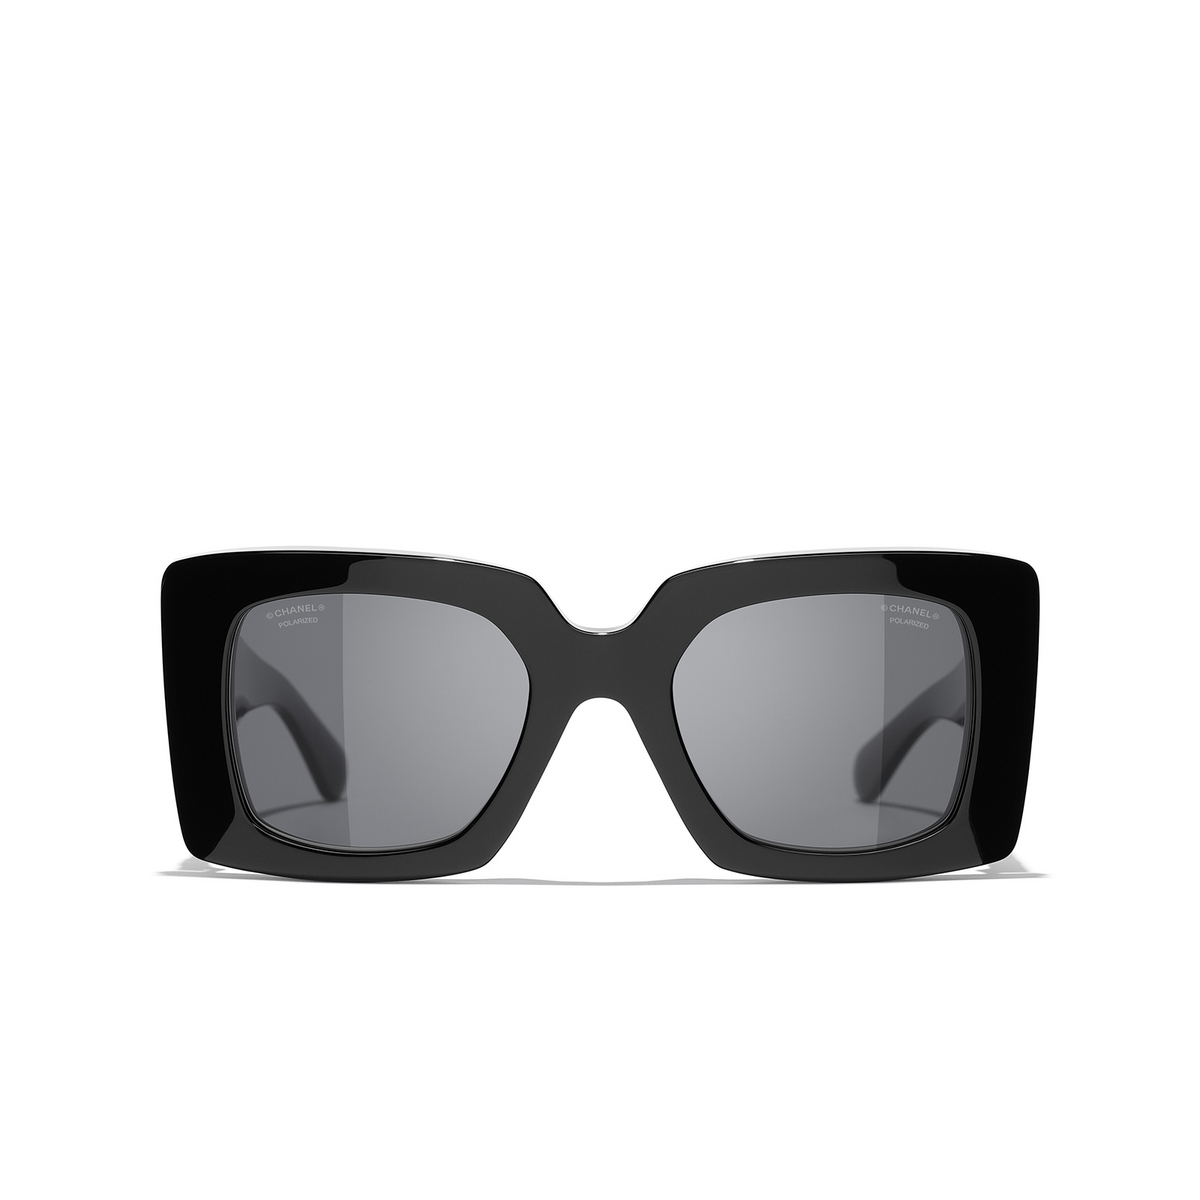 CHANEL square Sunglasses C622T8 Black - front view